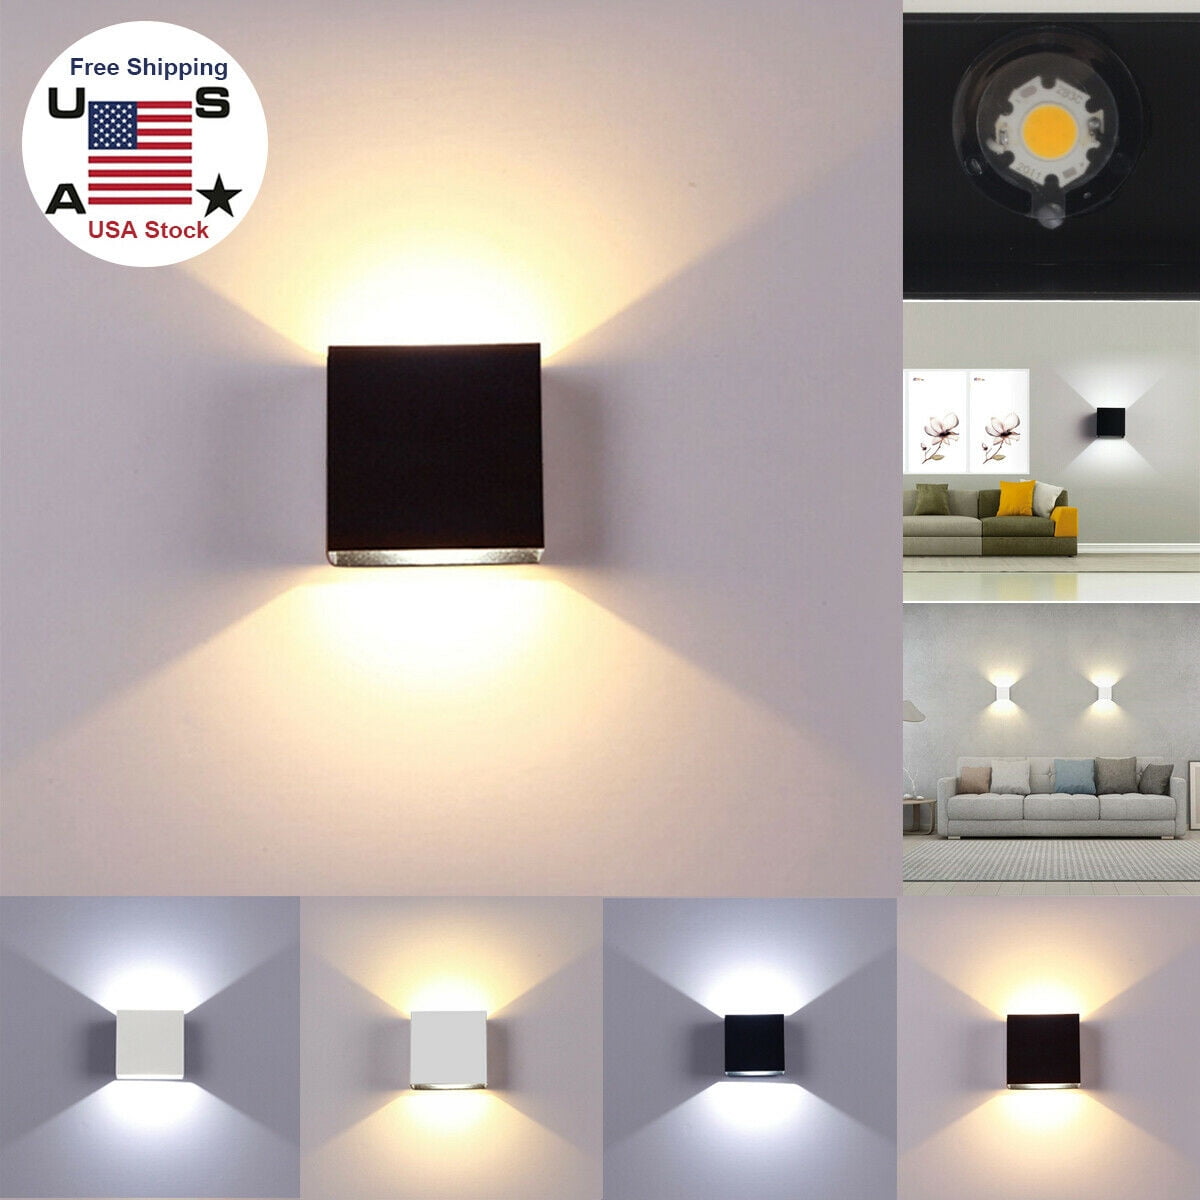 9W 3 LED Wall Light Up Down Lamp Modern Sconce Lighting Home Bedroom  S5 